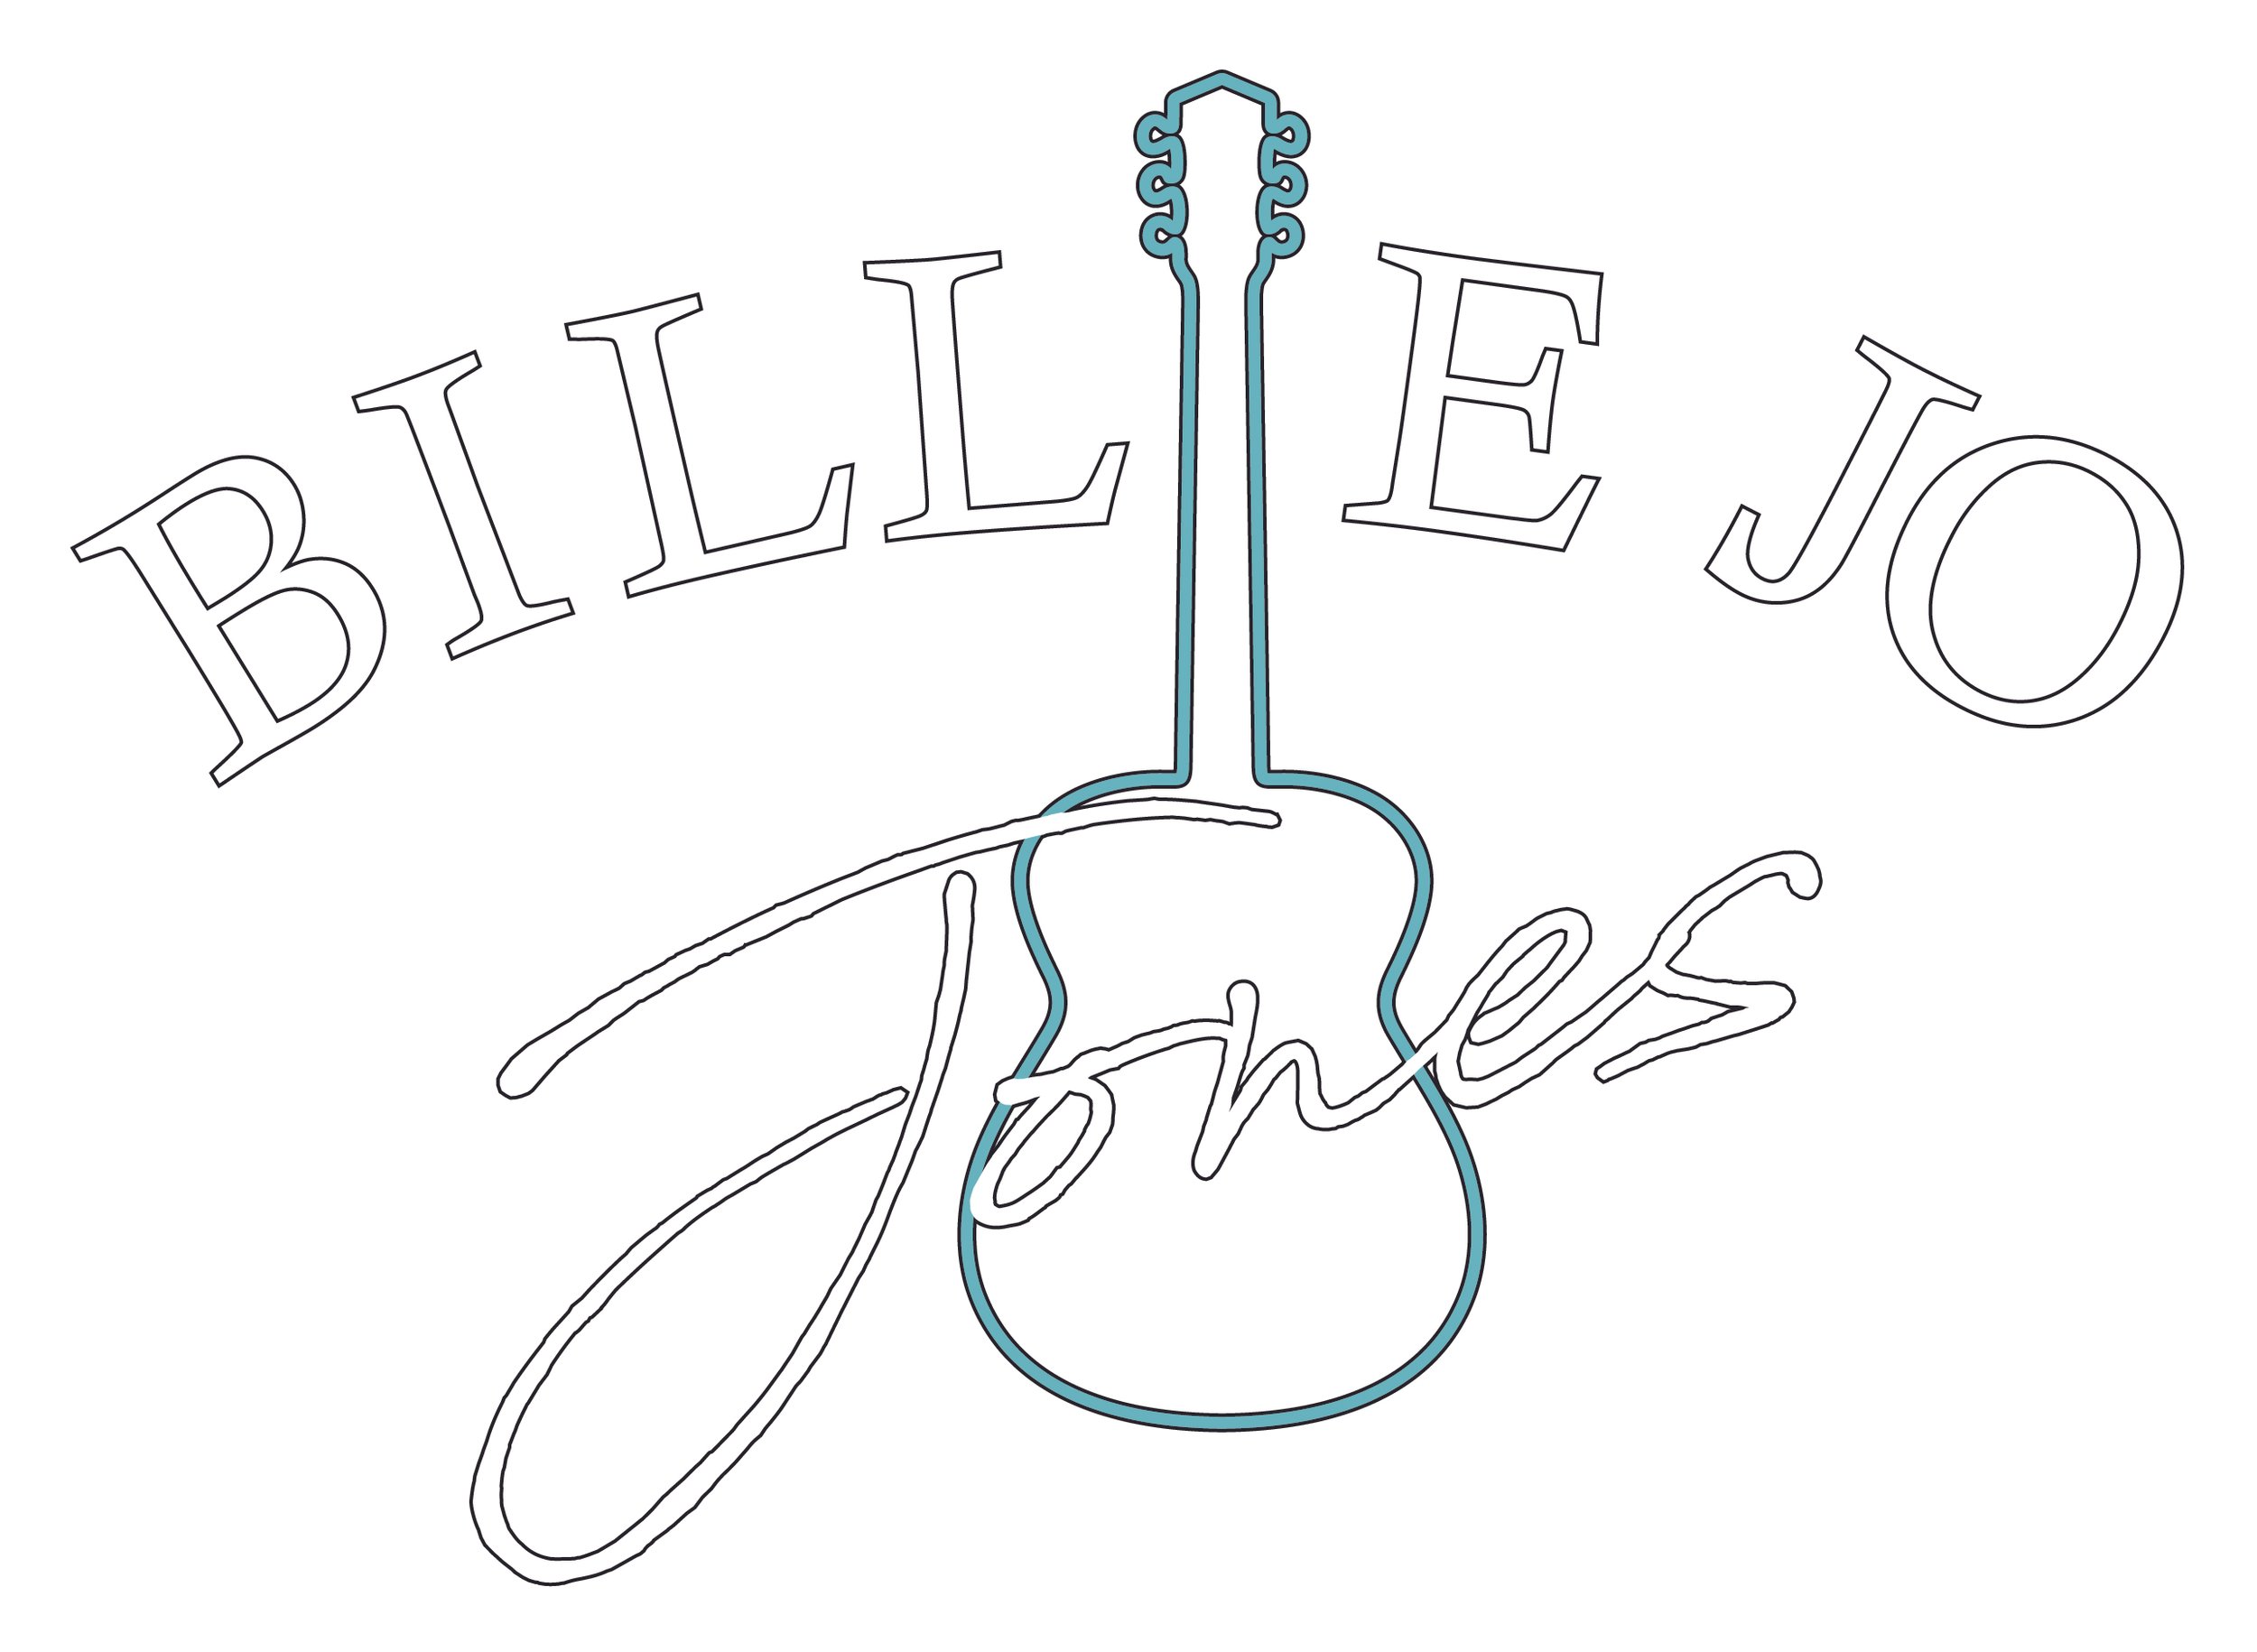 Billie Jo Jones logo.jpg